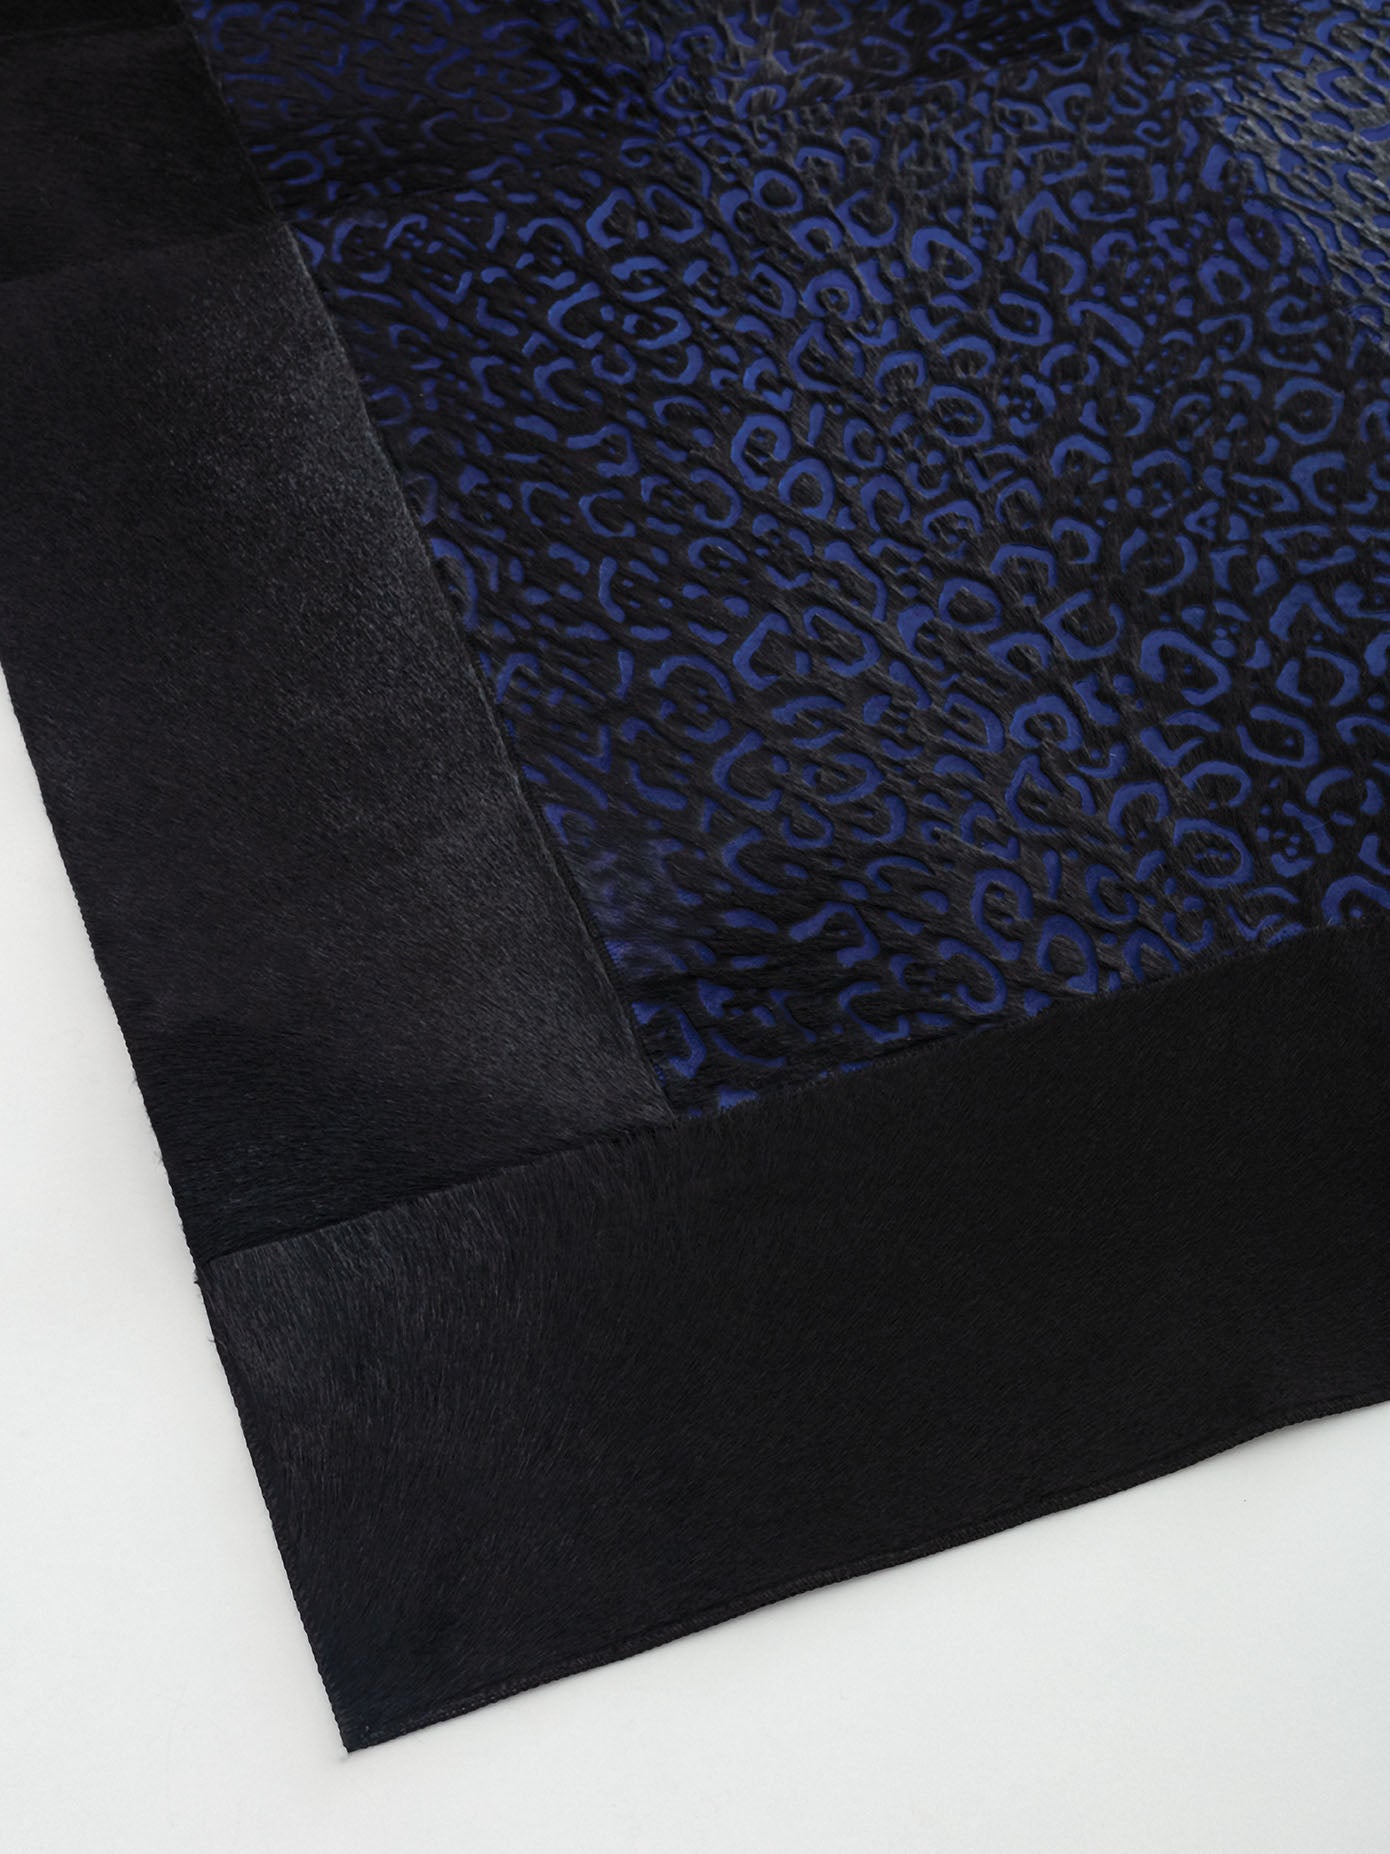 Sax Leopard Patterned Leather Carpet